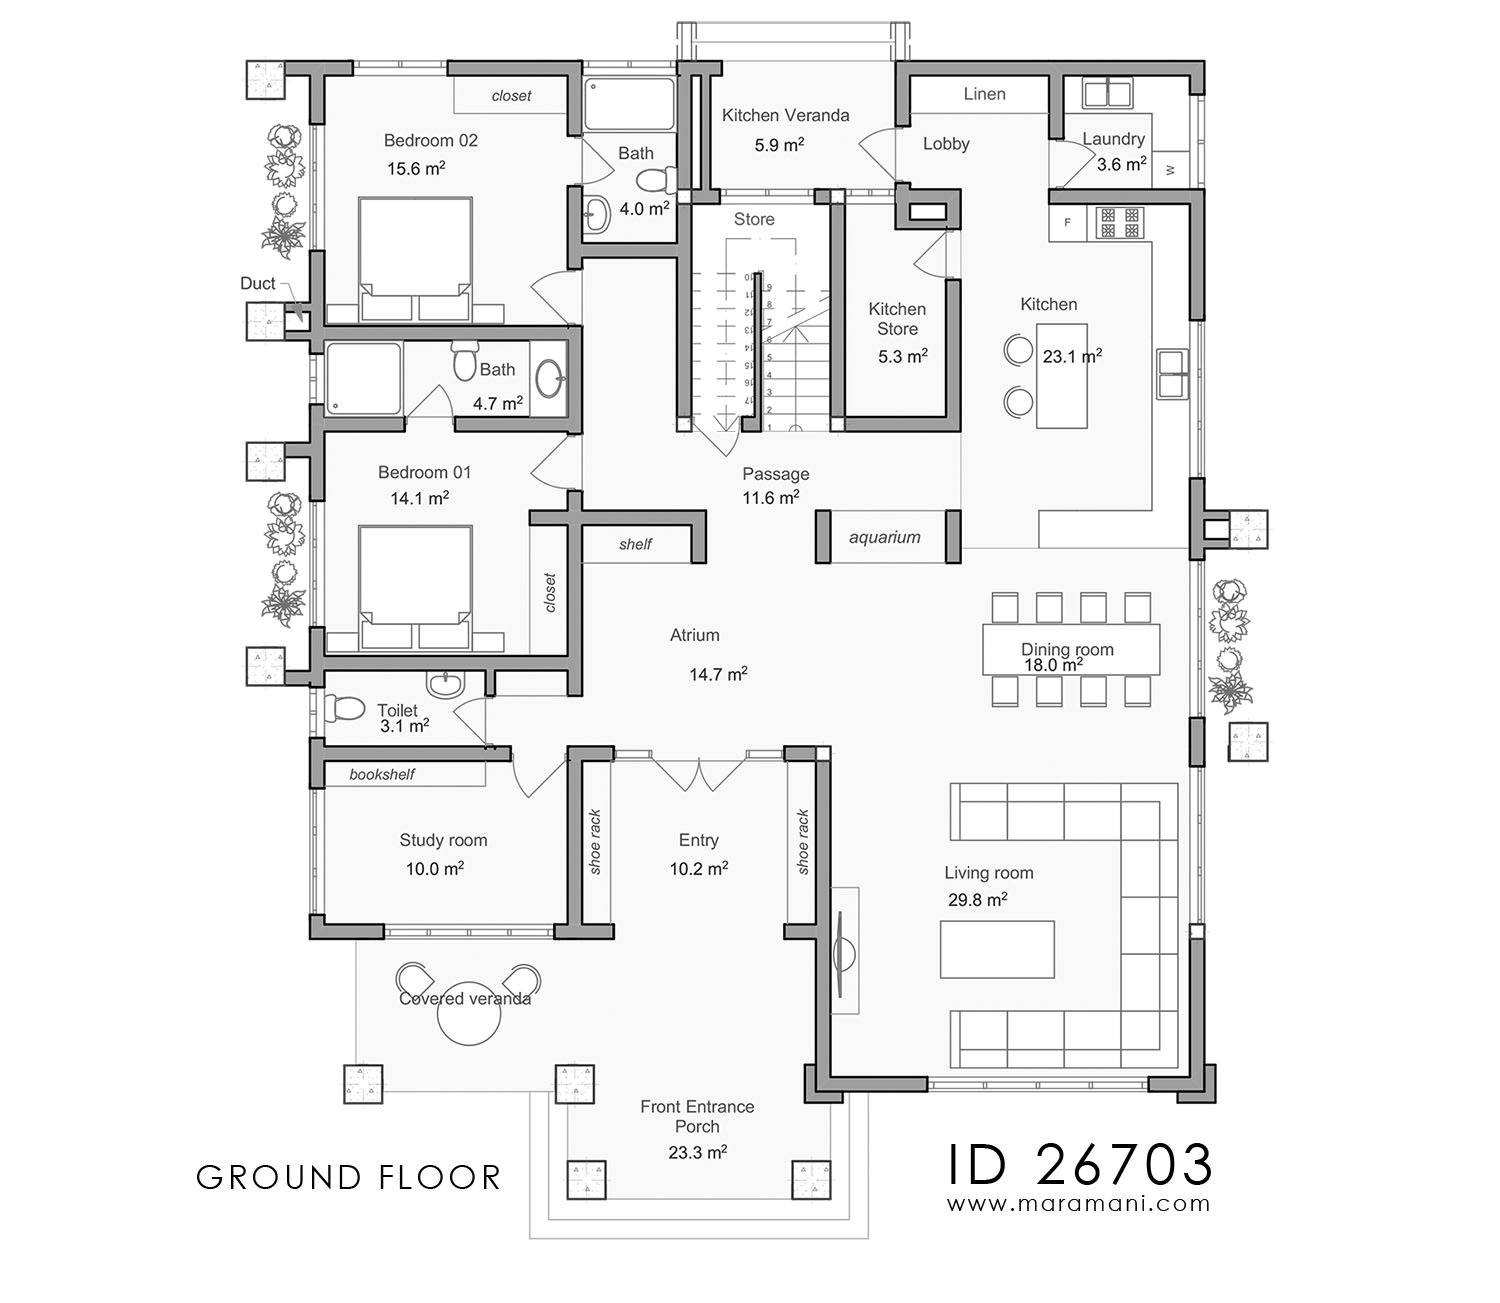 6 Bedroom House Plan - ID 26703